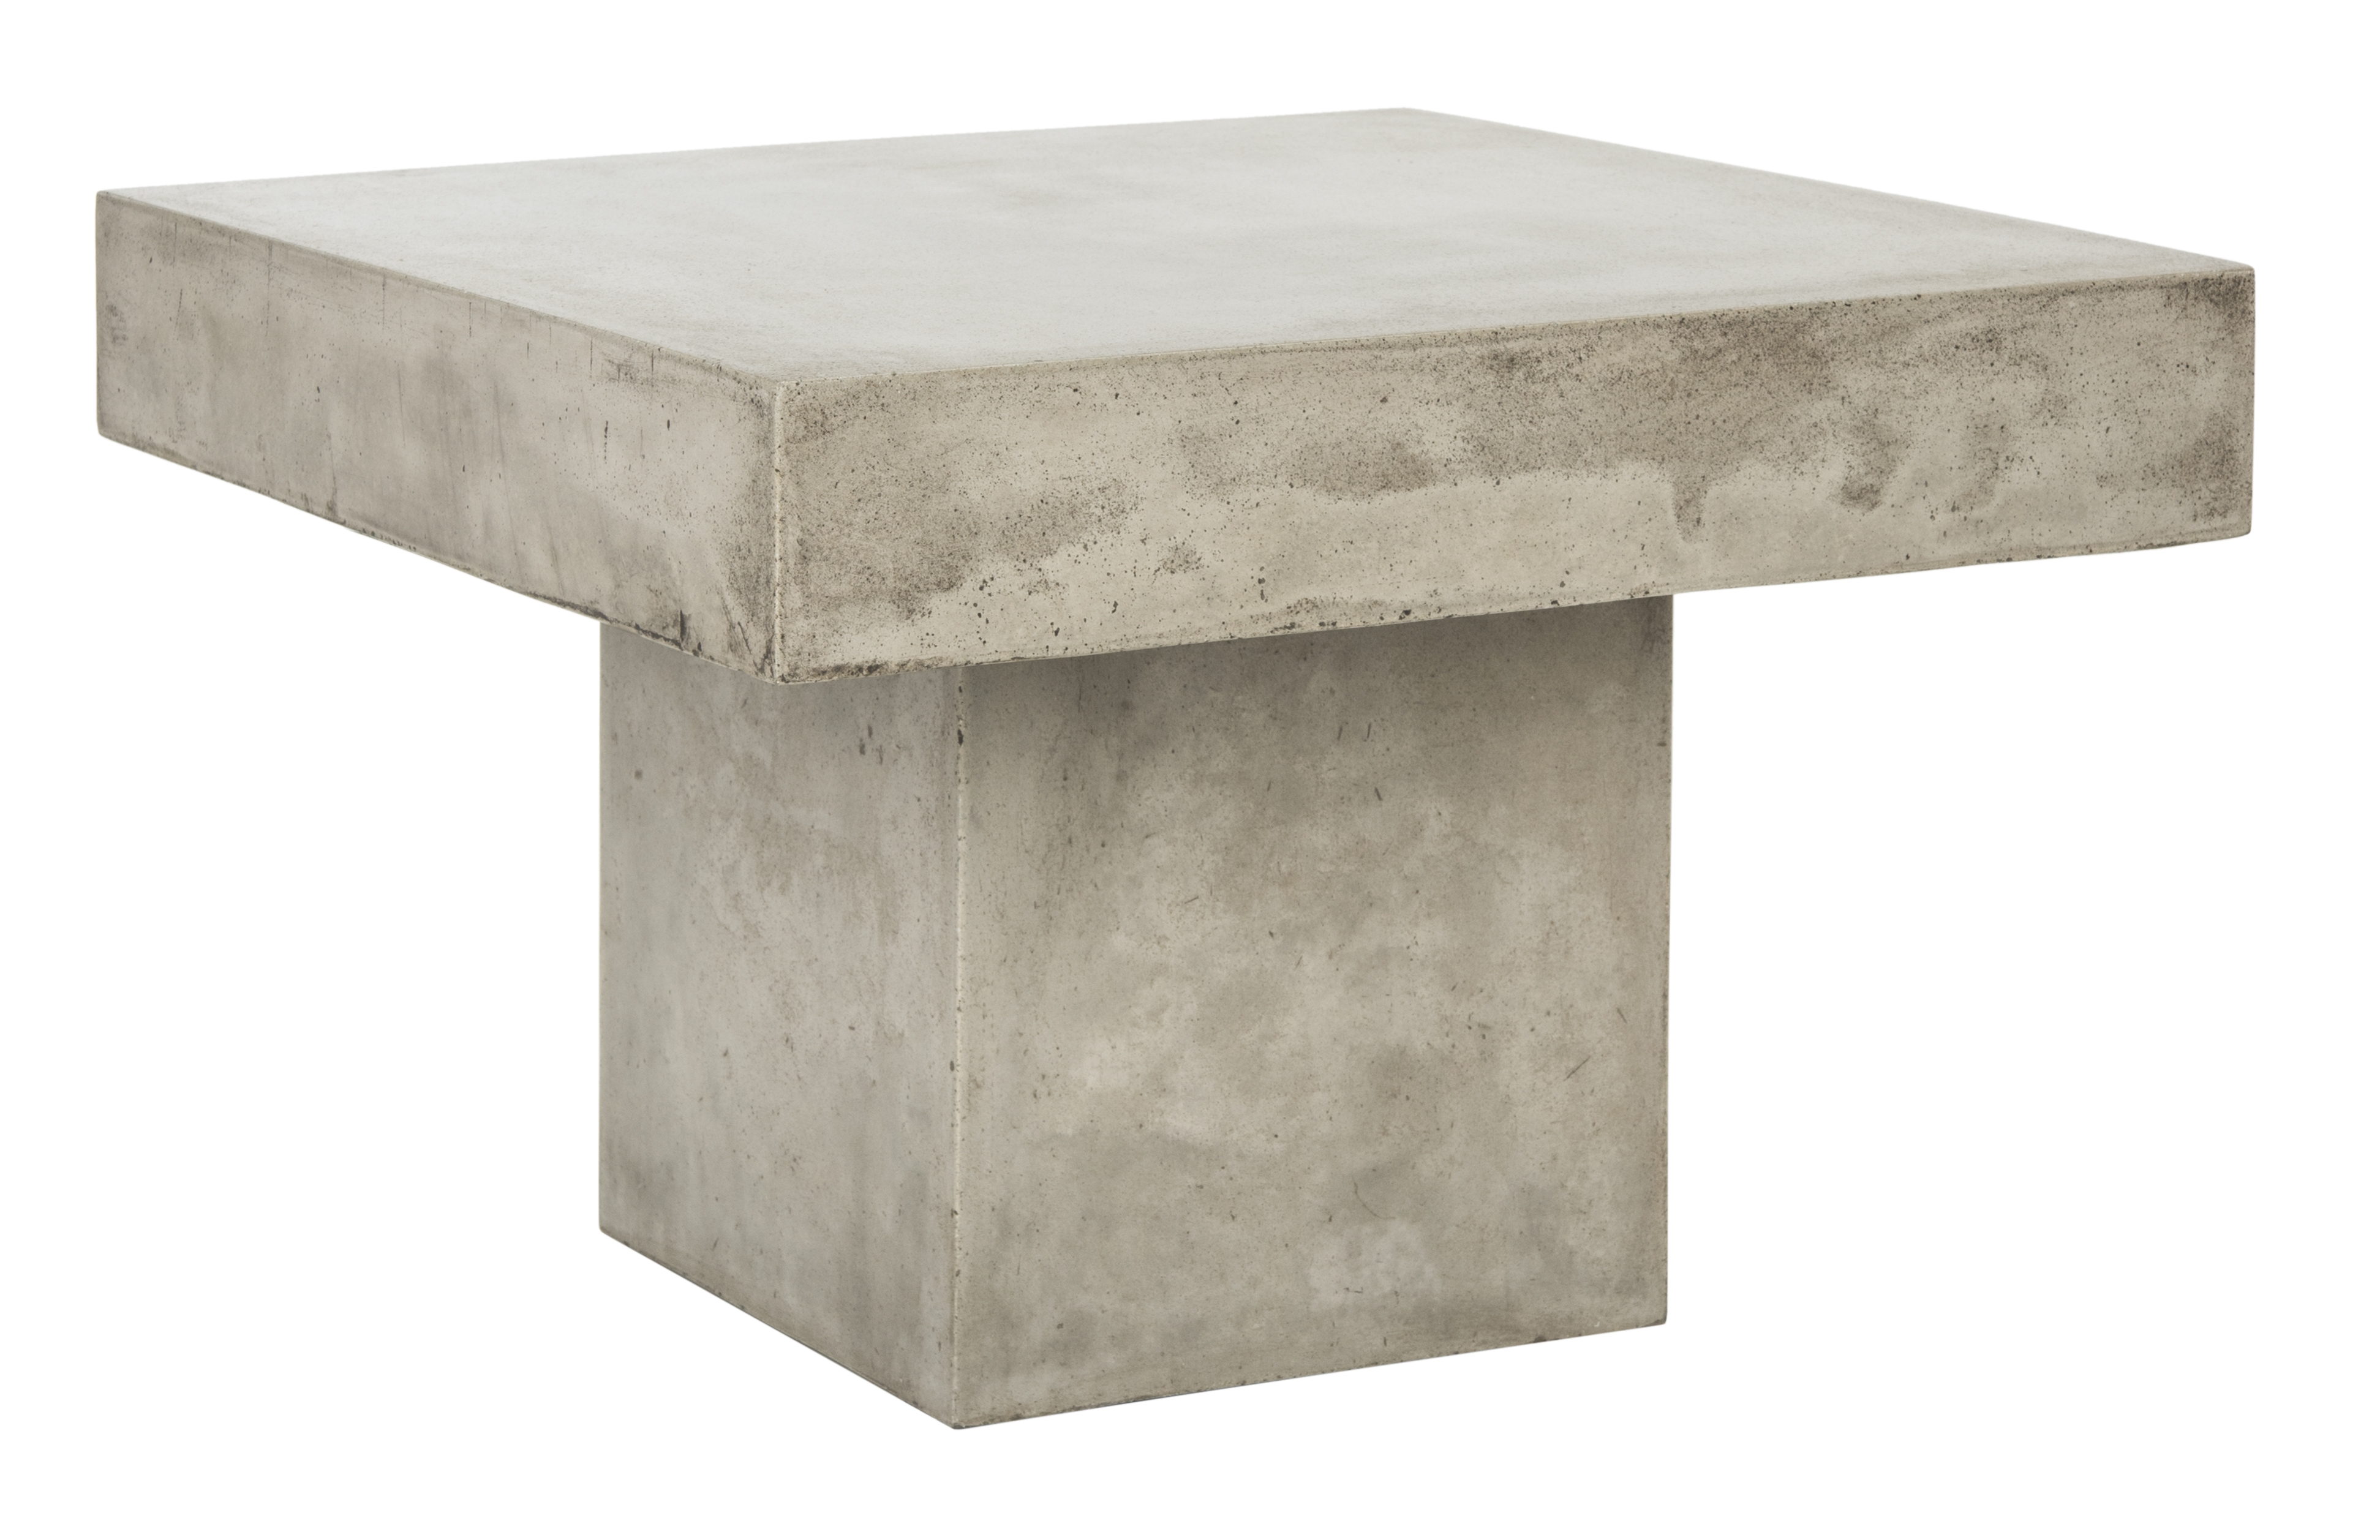 Tallen Indoor/Outdoor Modern Concrete 15.75-Inch H Coffee Table - Dark Grey - Safavieh - Image 4